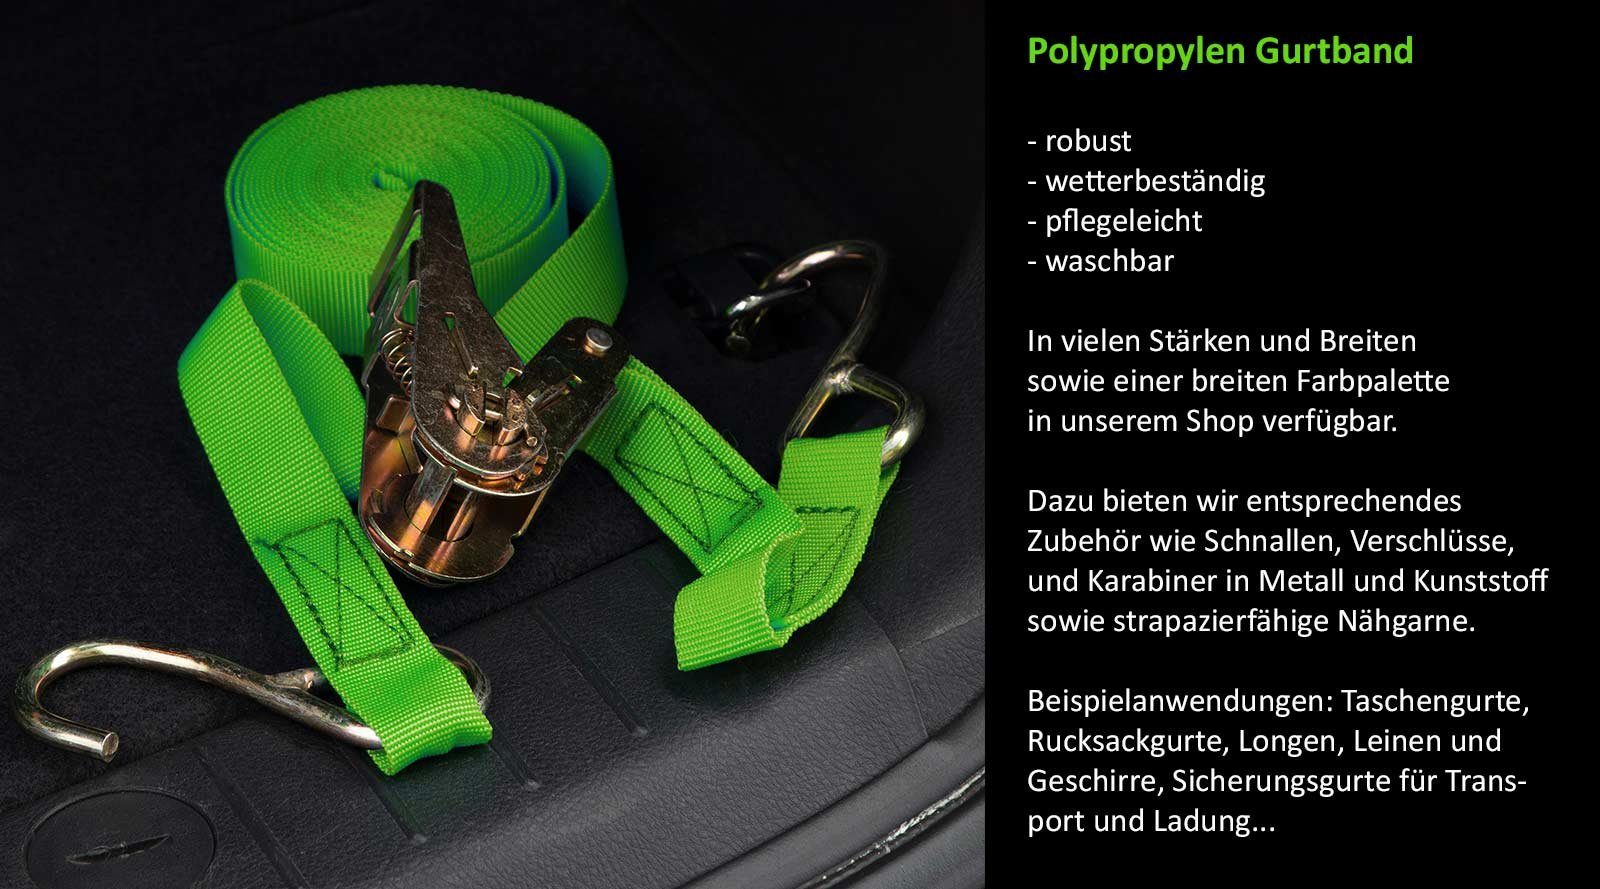 876 Gurtband, breit, grün Farbwahl PP maDDma stark, 50mm Polypropylen, 1,3mm Rollladengurt, 12m